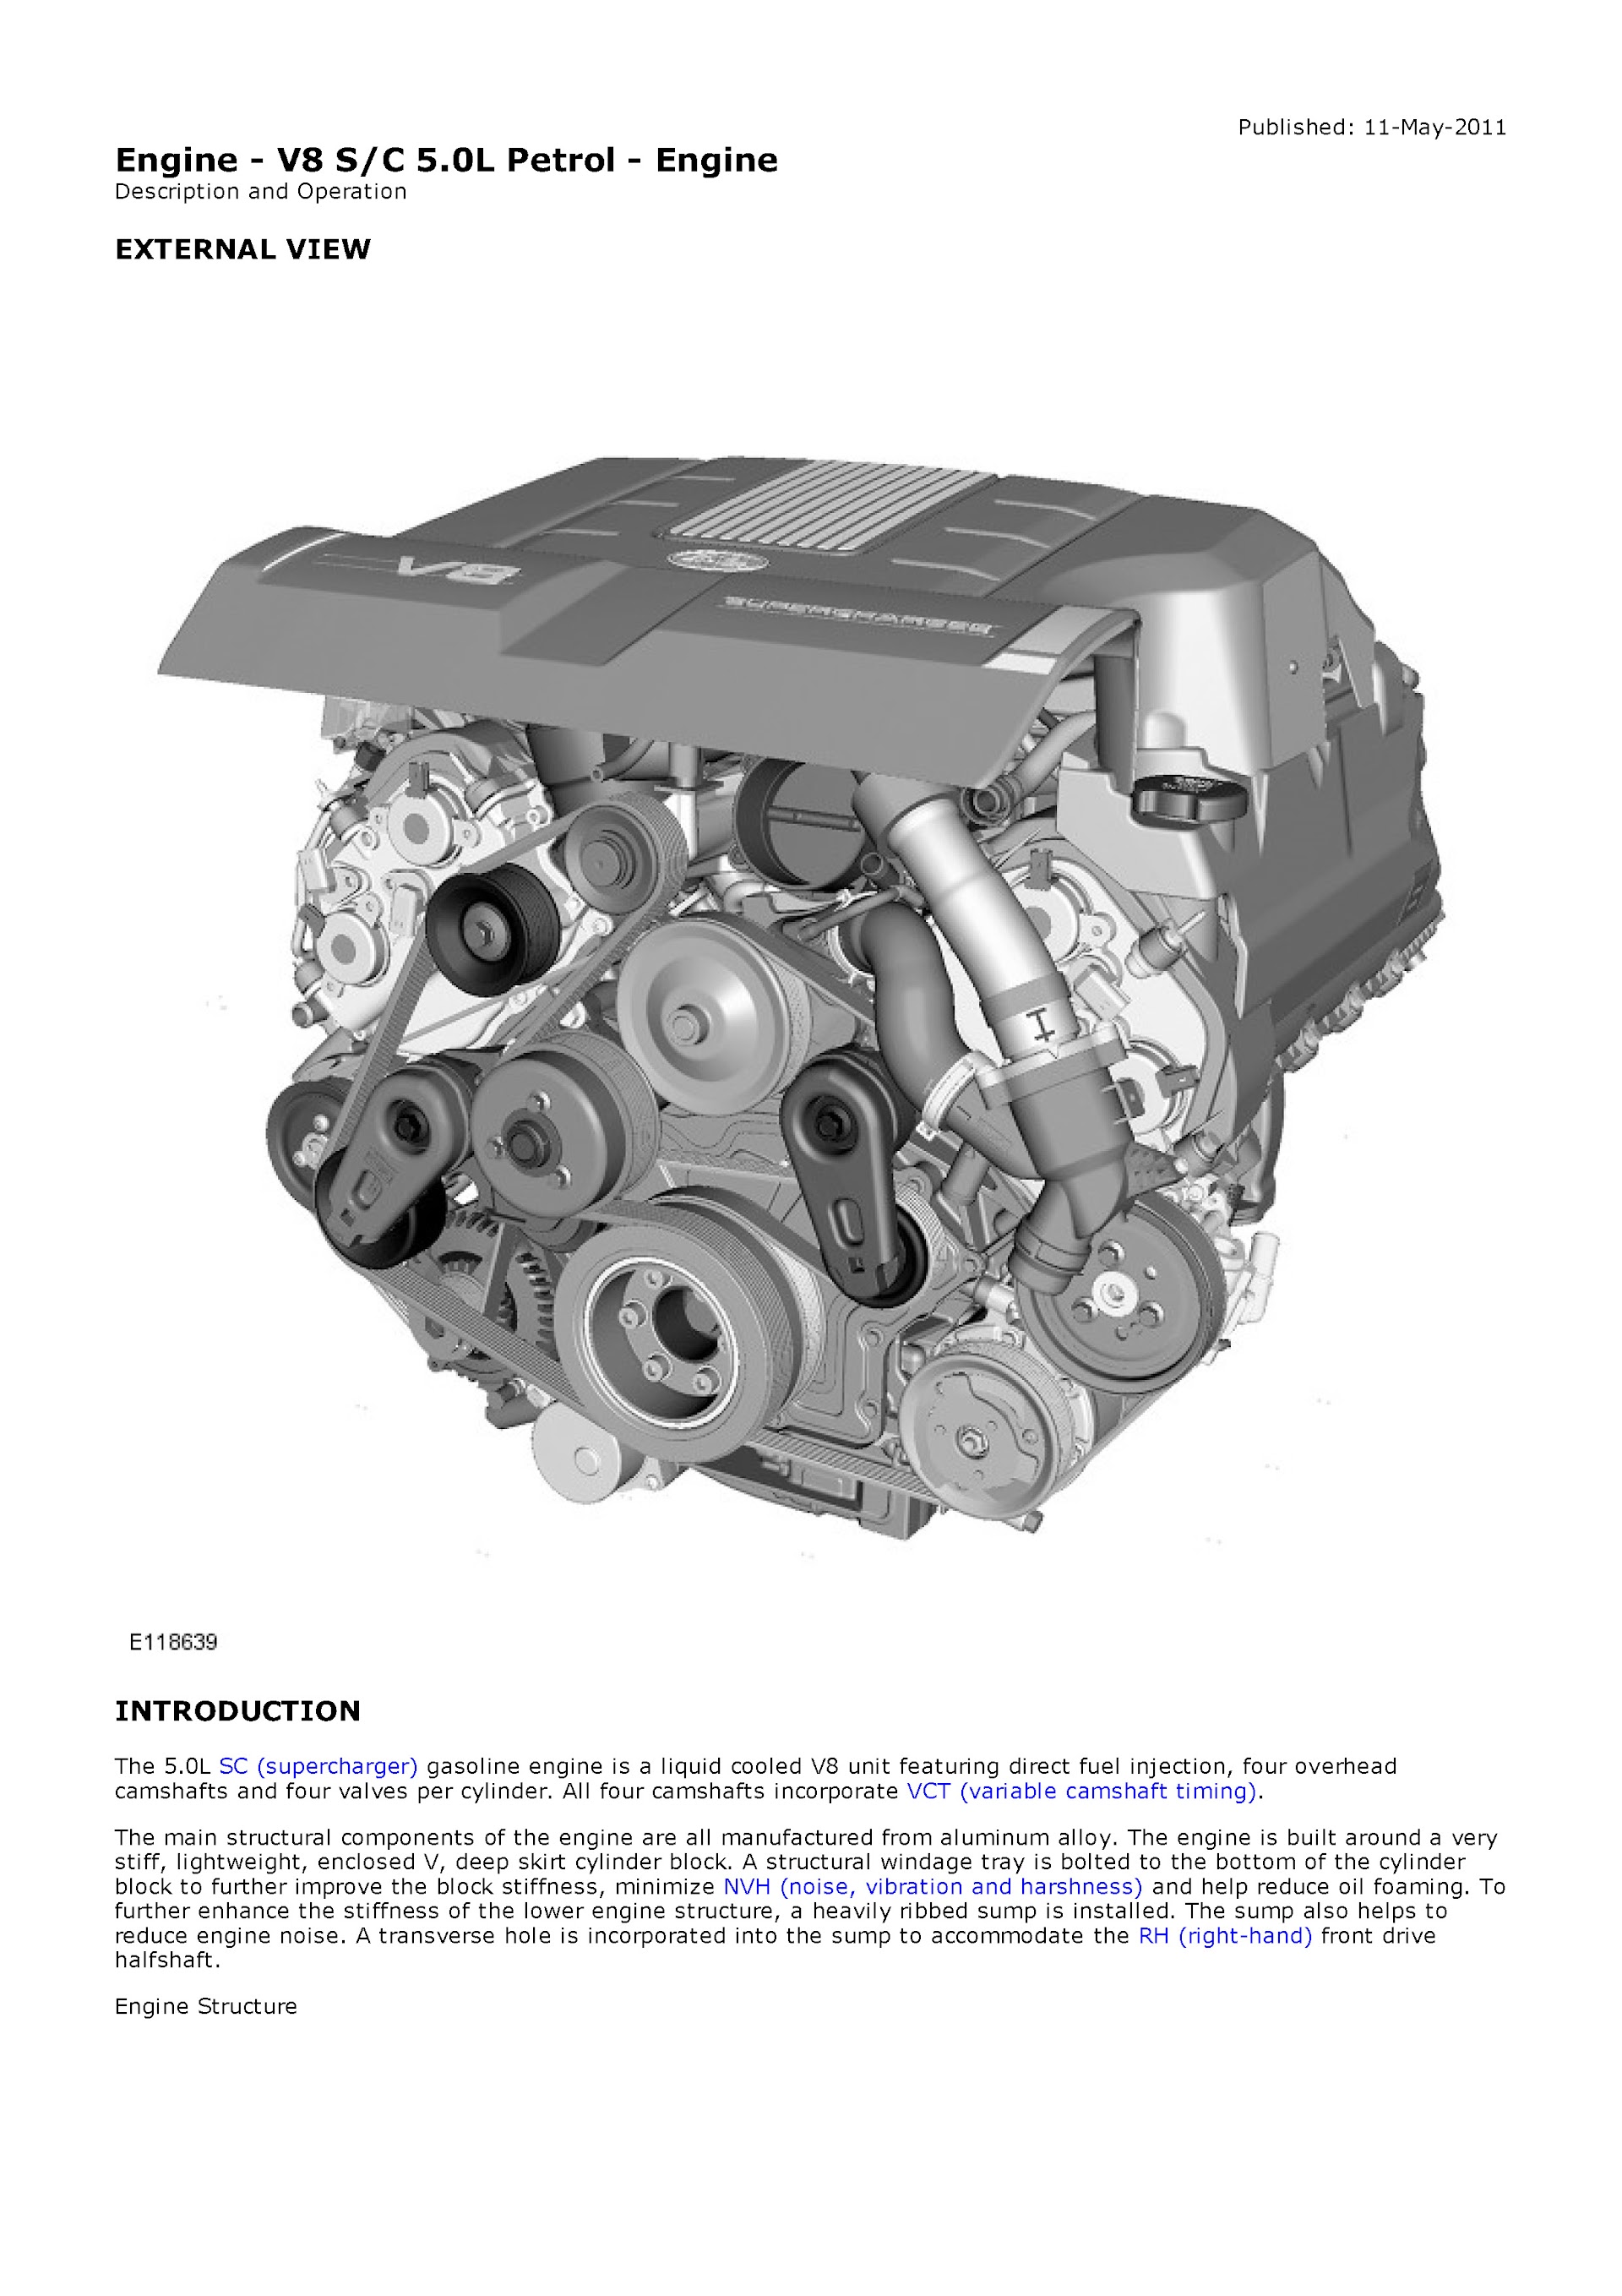 2010-2012 Range Rover L322 Repair Manual, Engine V8 S/C 5.0L Petrol